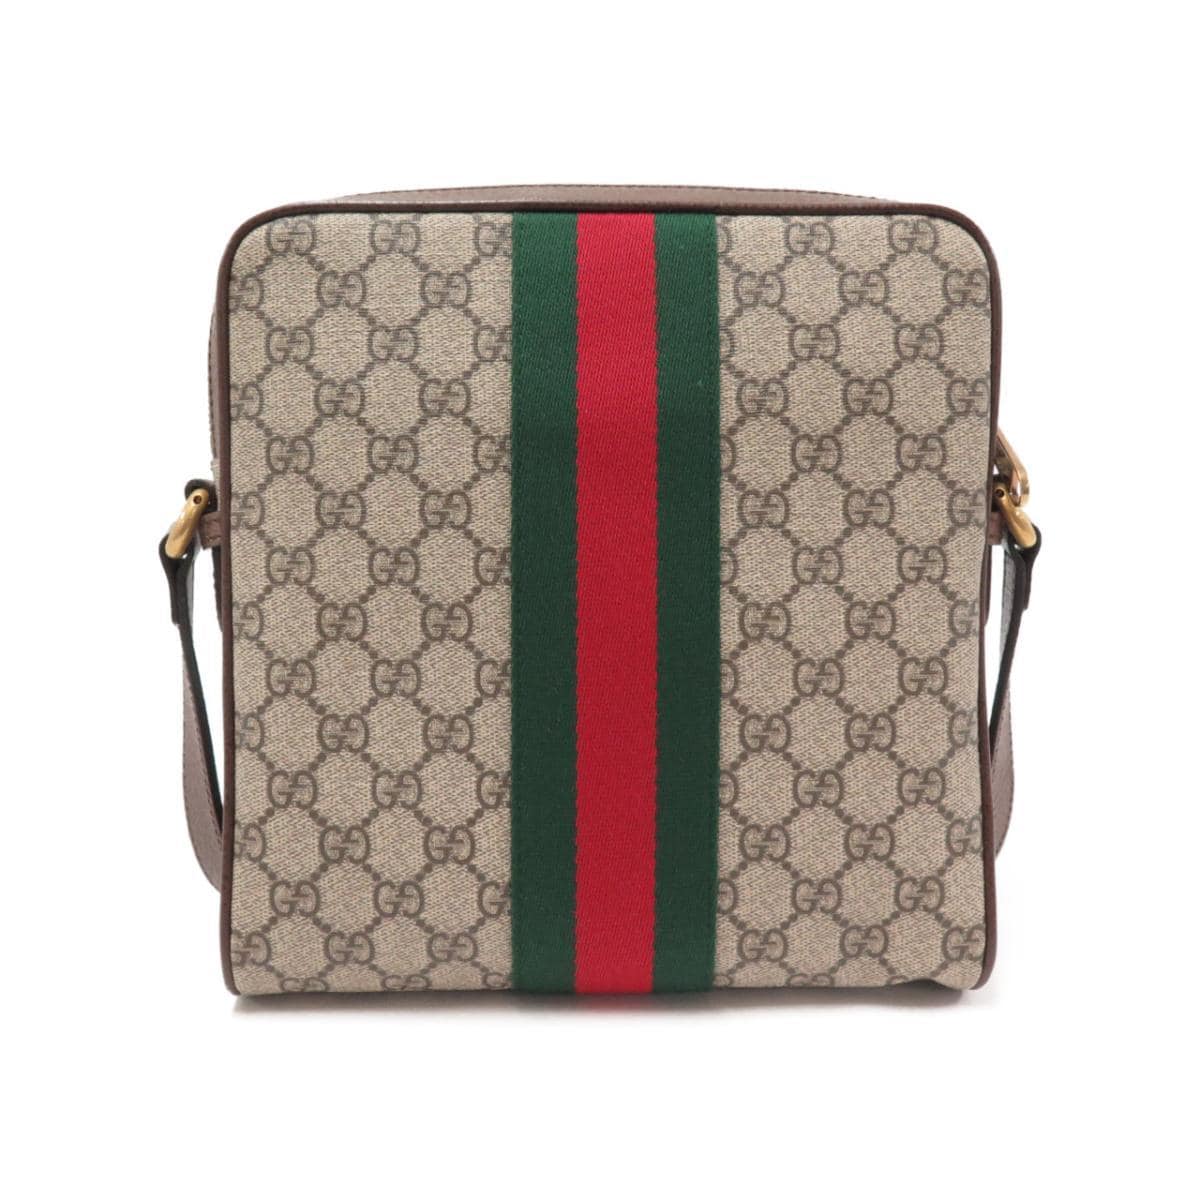 [BRAND NEW] Gucci bag 547926 96IWT